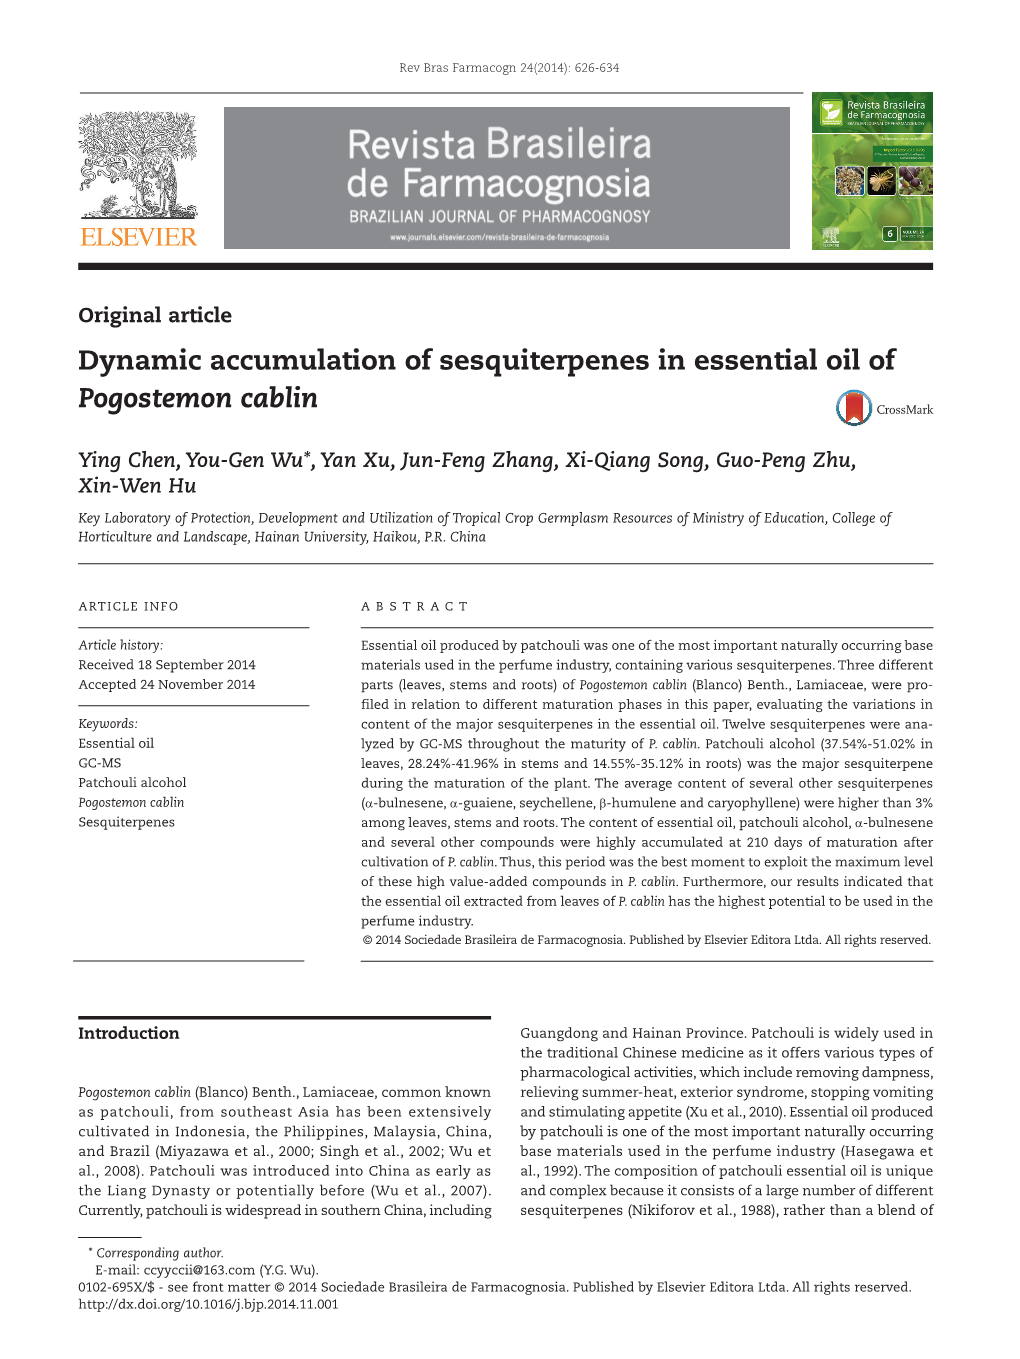 Dynamic Accumulation of Sesquiterpenes in Essential Oil of Pogostemon Cablin